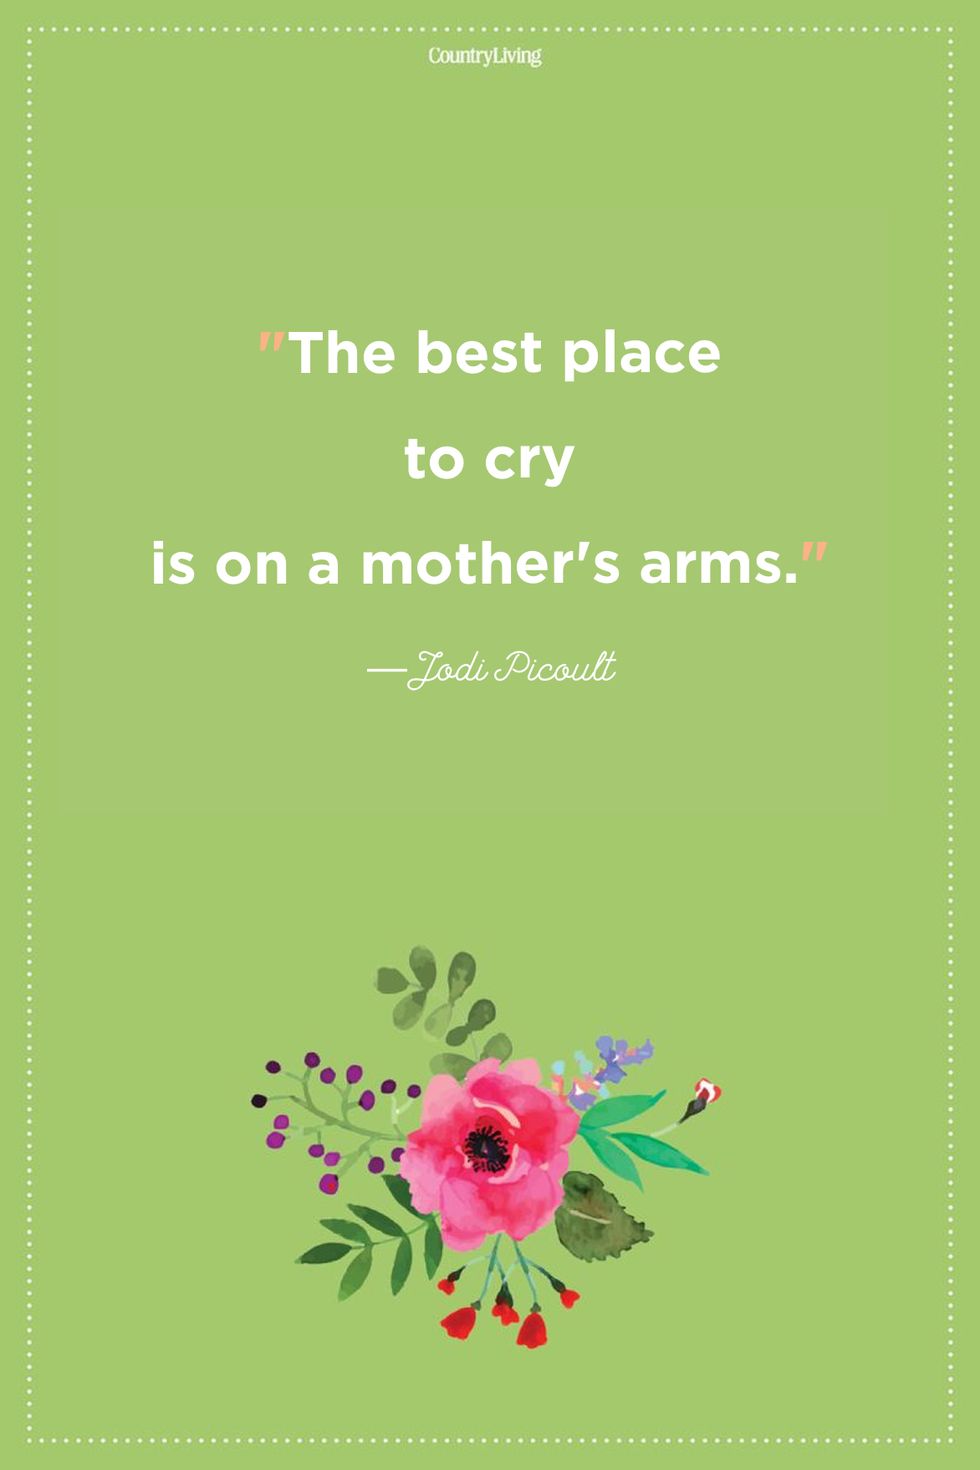 motherhood quotes mom Jodi Picoult